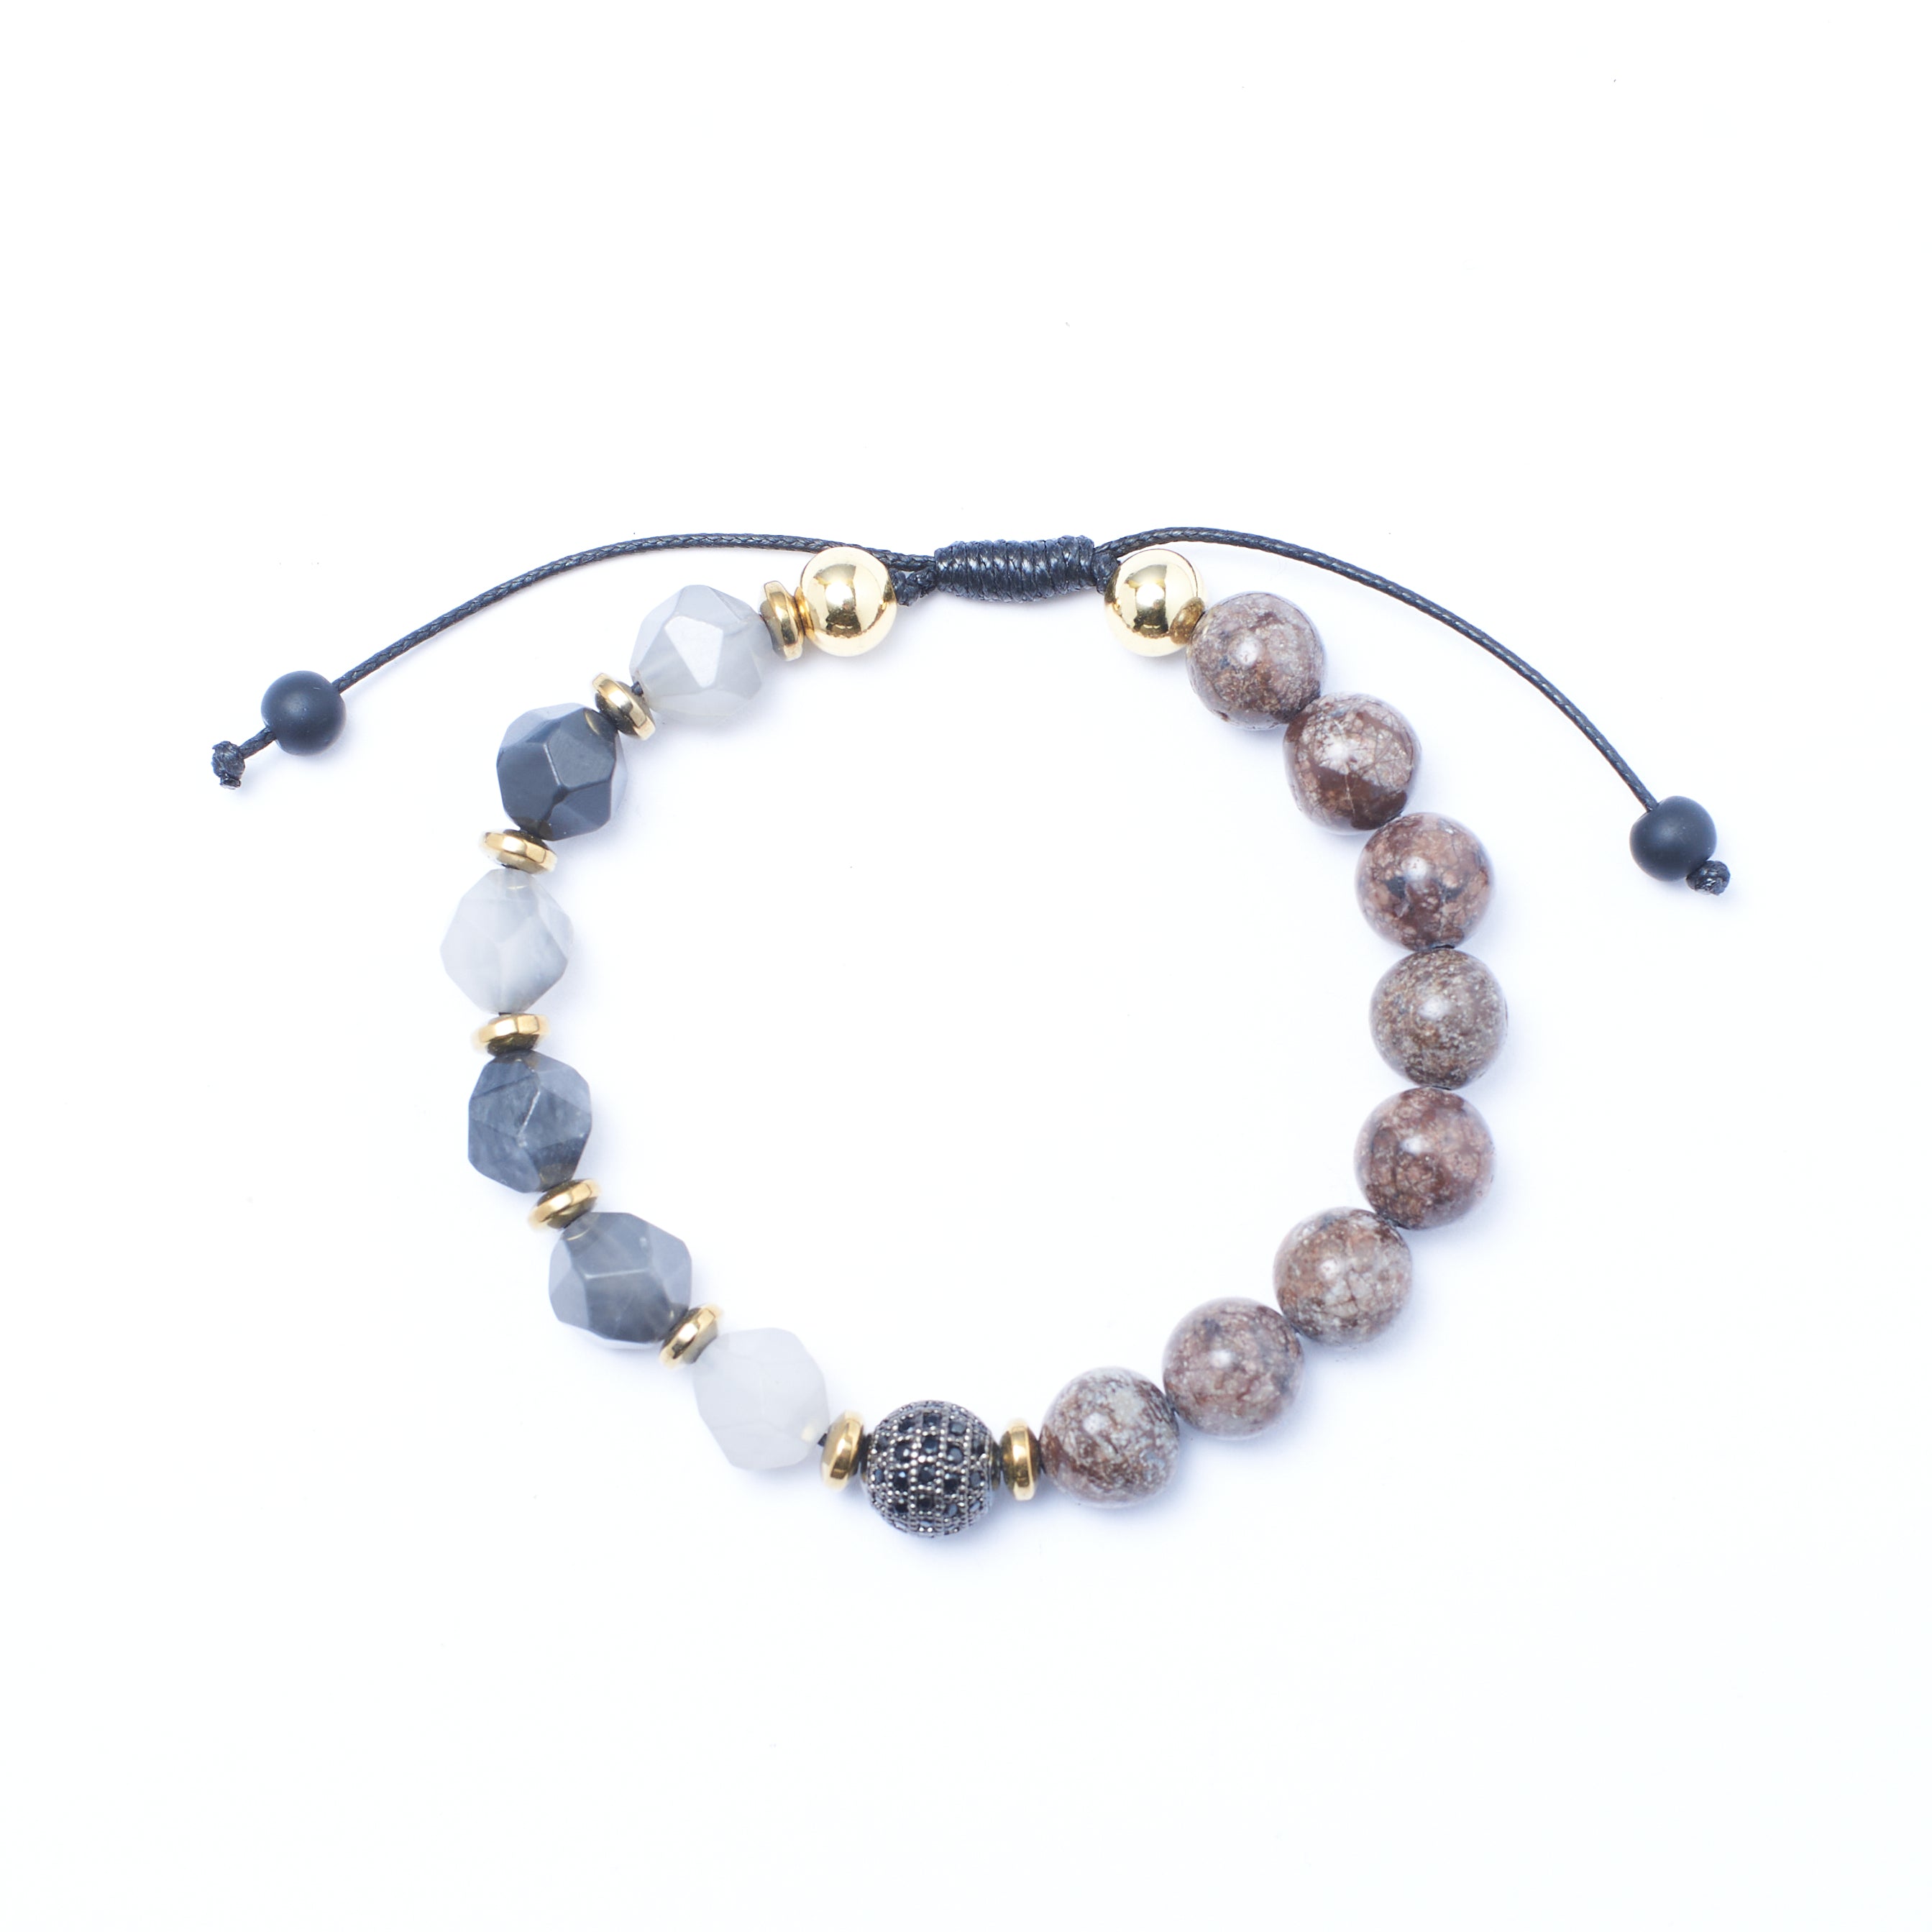 Blue sandstone - anxiety and stress relief gemstone bracelet